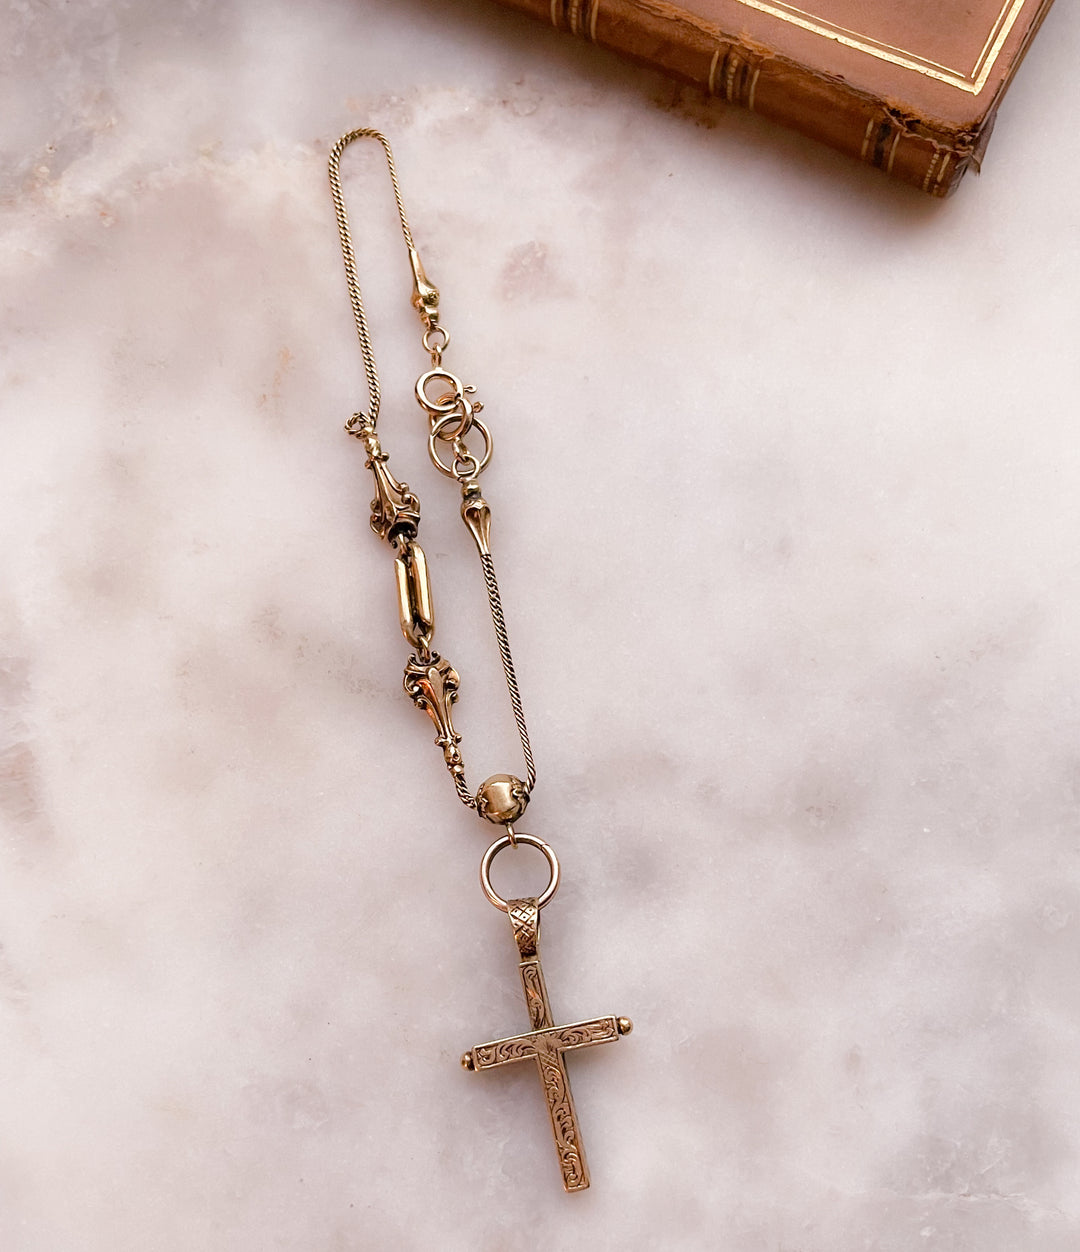 Stunning Cross Albertina with Embellished Chain